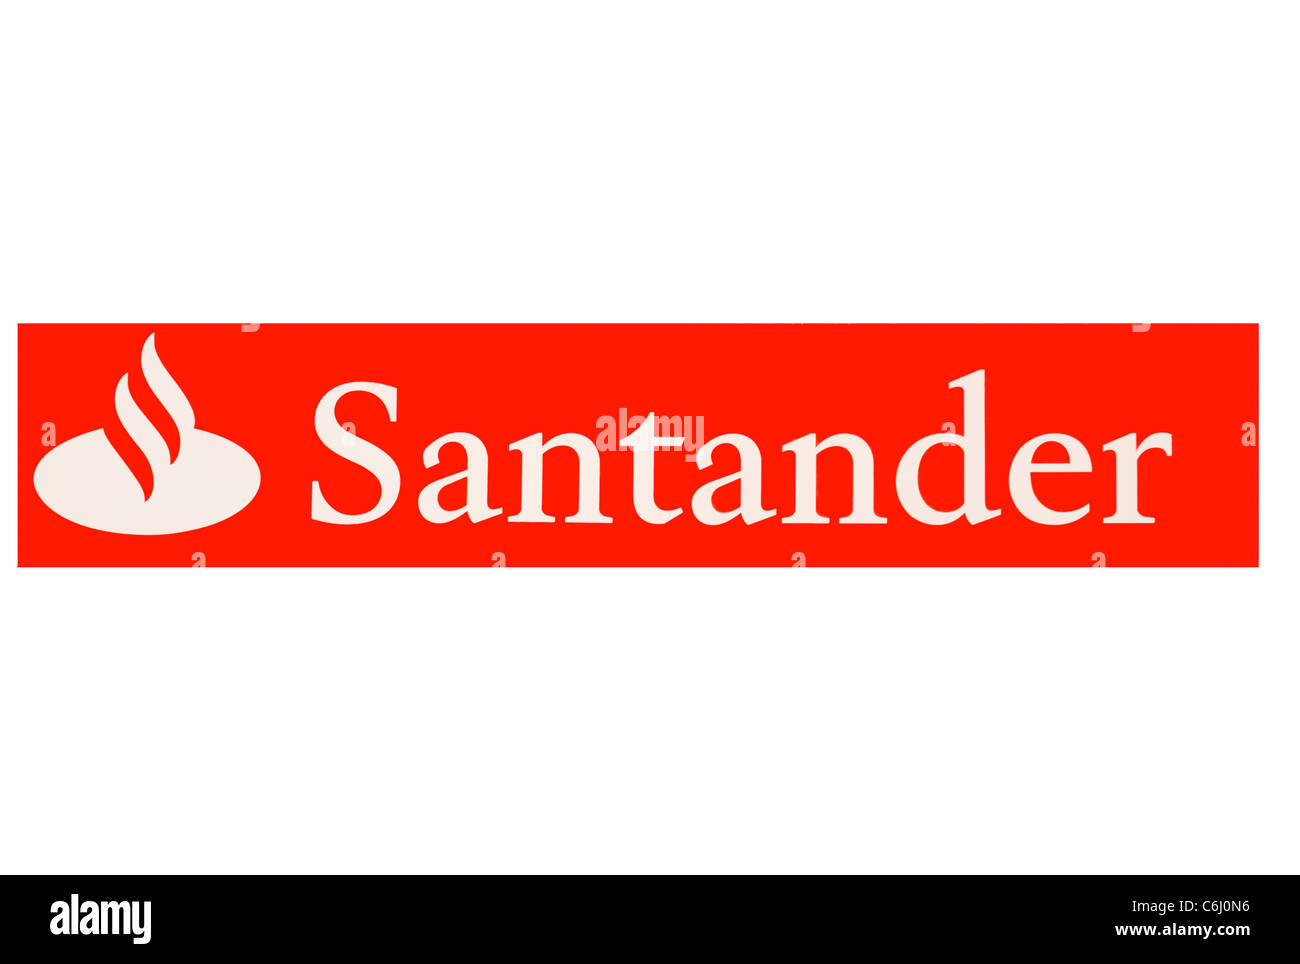 Santander Bank Sign Spanish High Street Banks uk Stock Photo